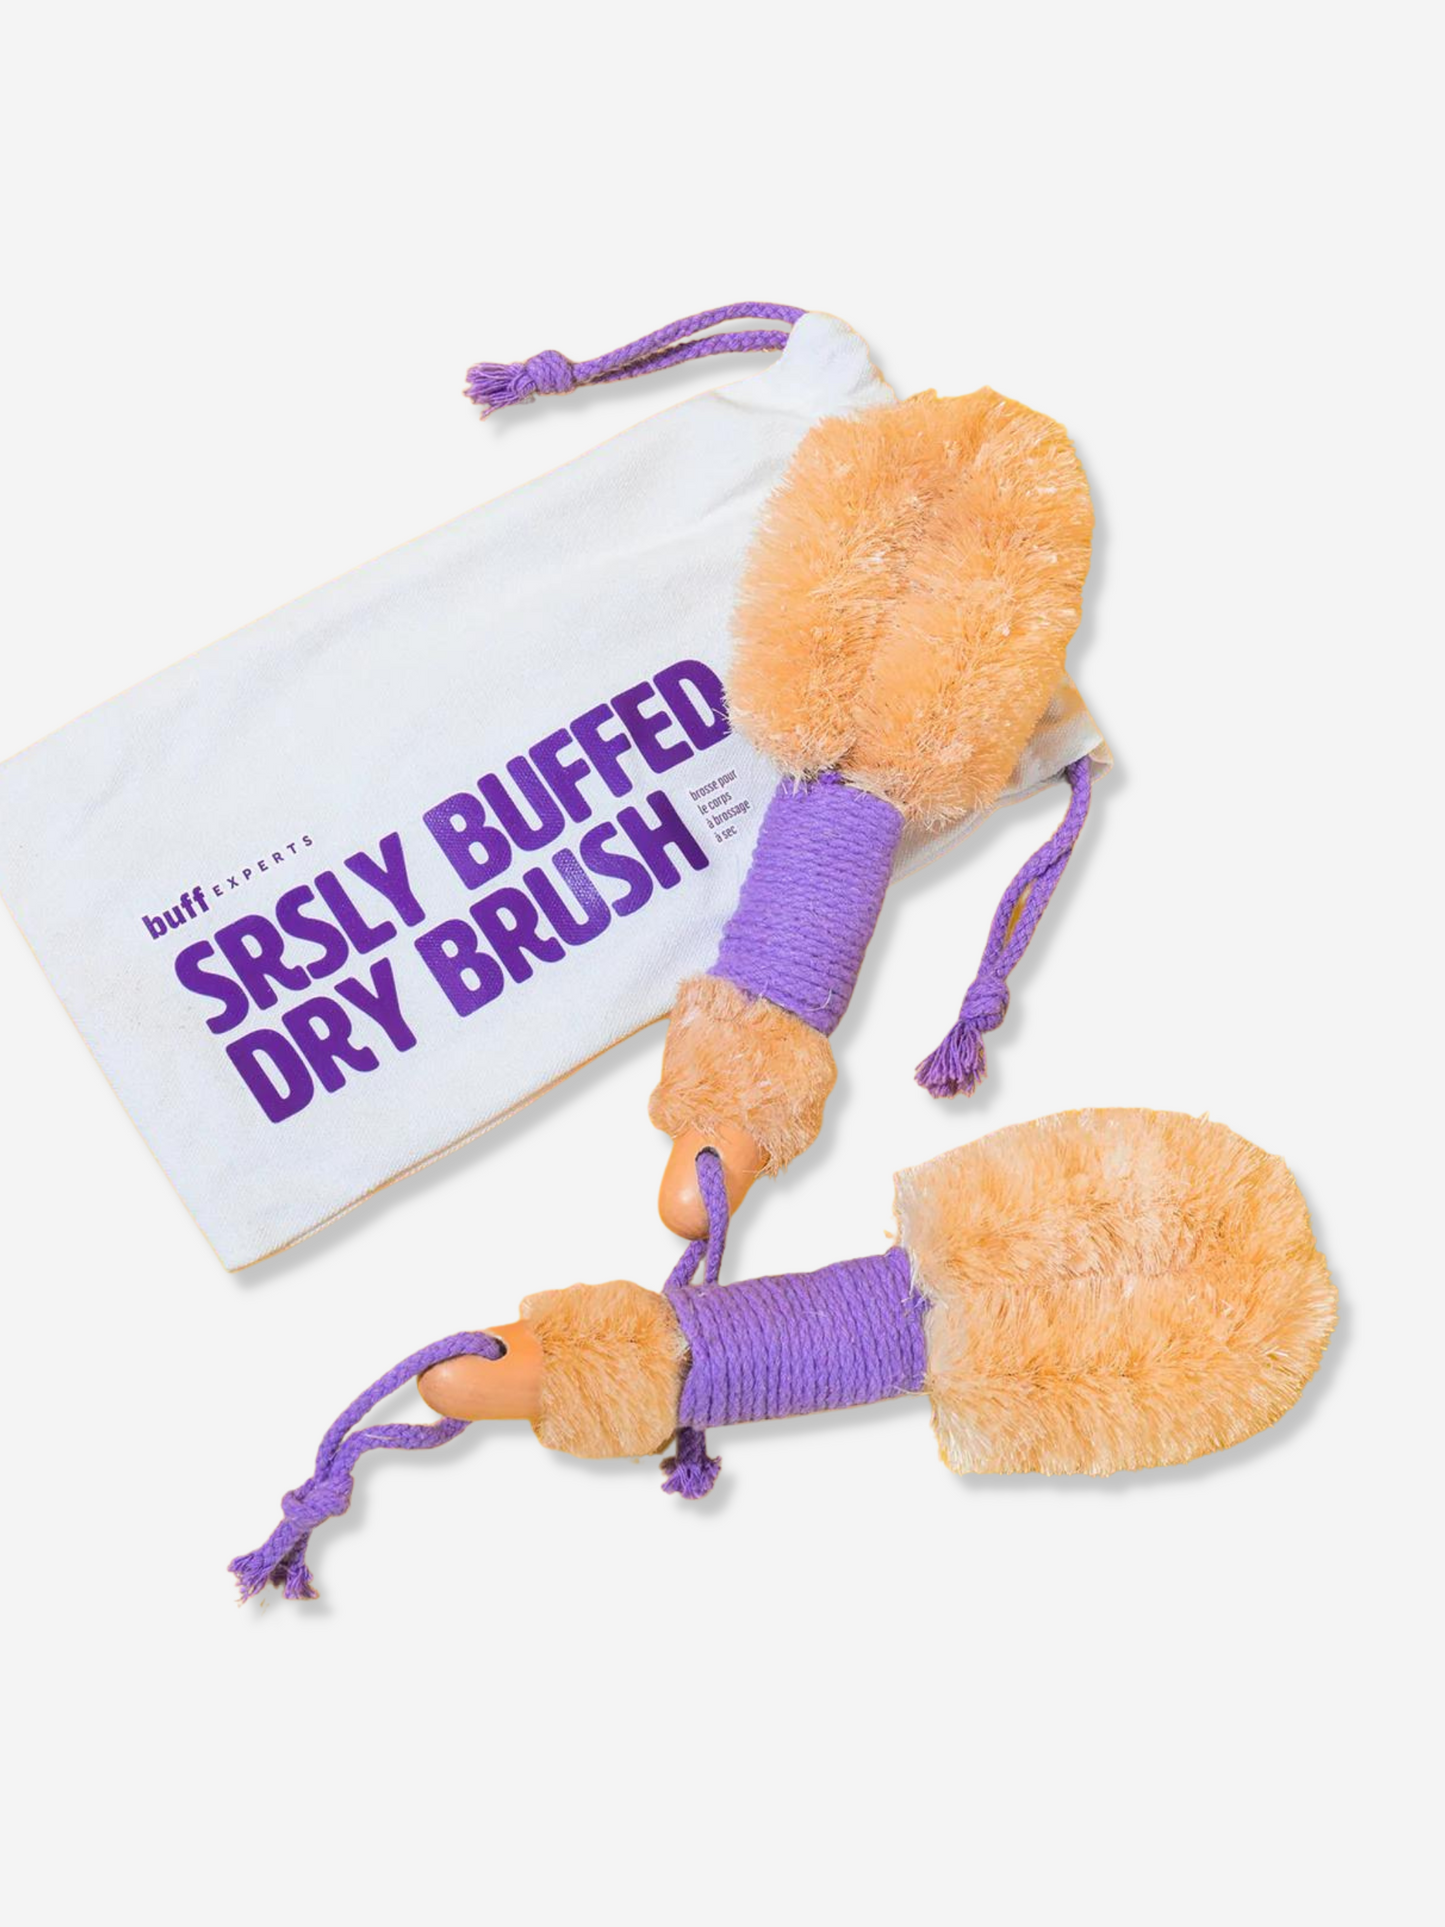 Srsly Buffed Dry Brush